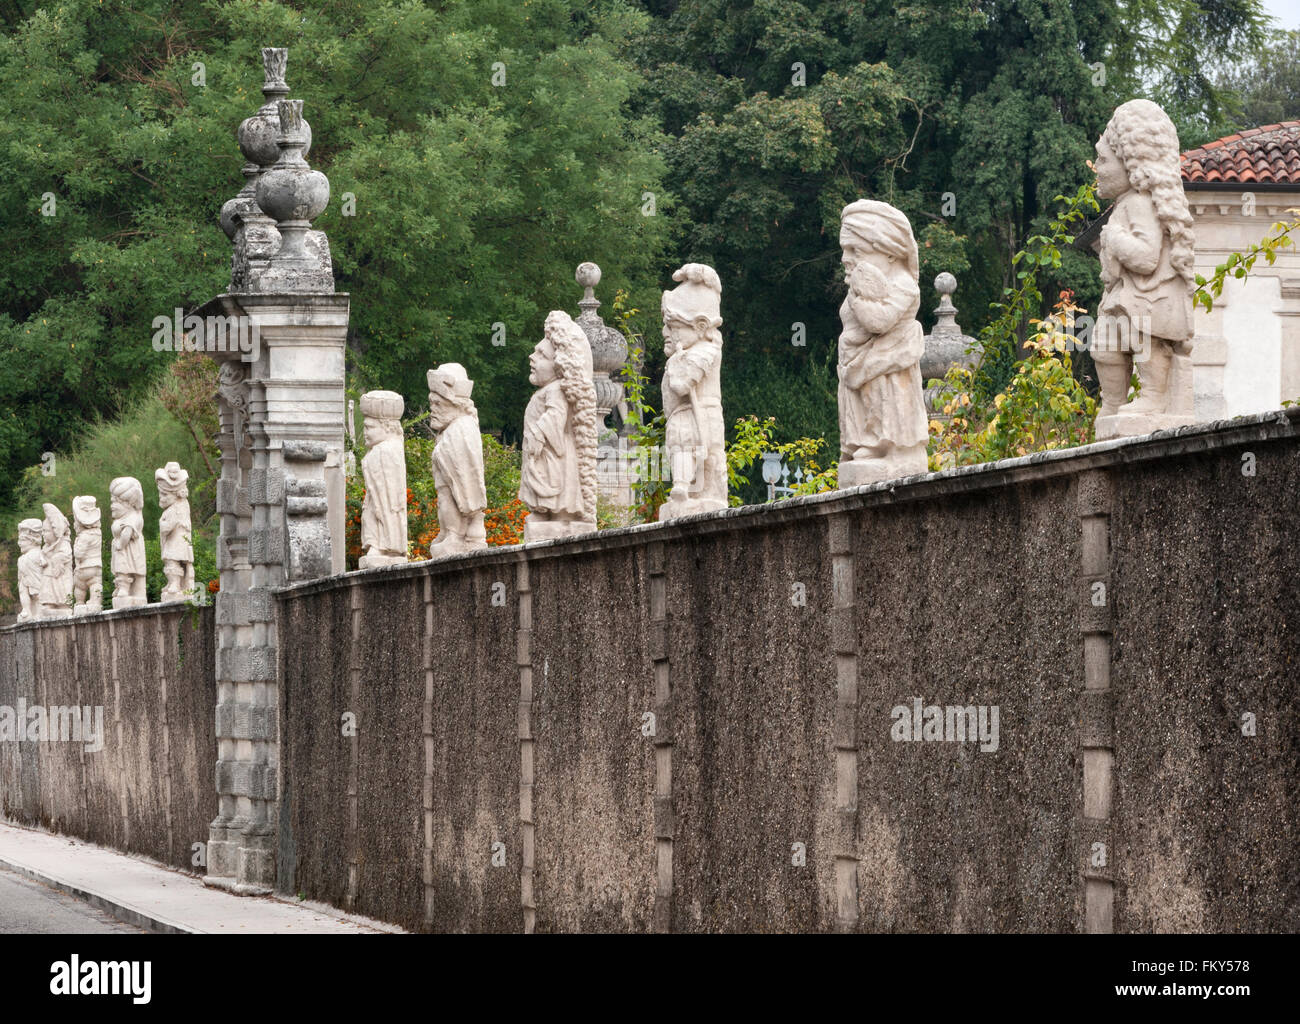 Villa Valmarana ai Nani, Vicenza, Italy. 17c statues of dwarves (dwarfs) line the long garden wall and give the villa its name Stock Photo